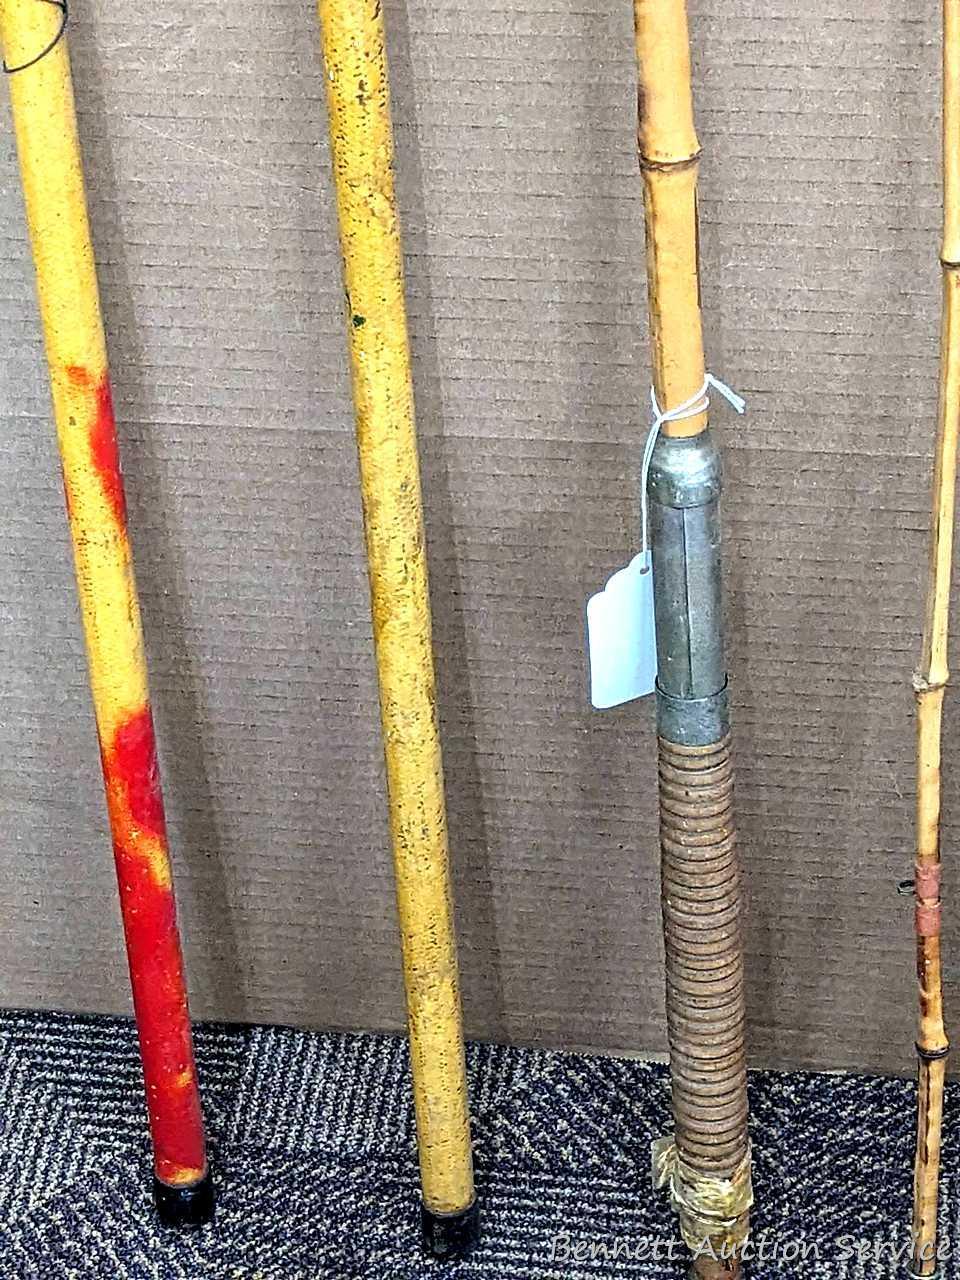 Several cane pole fishing pole segments. Longest